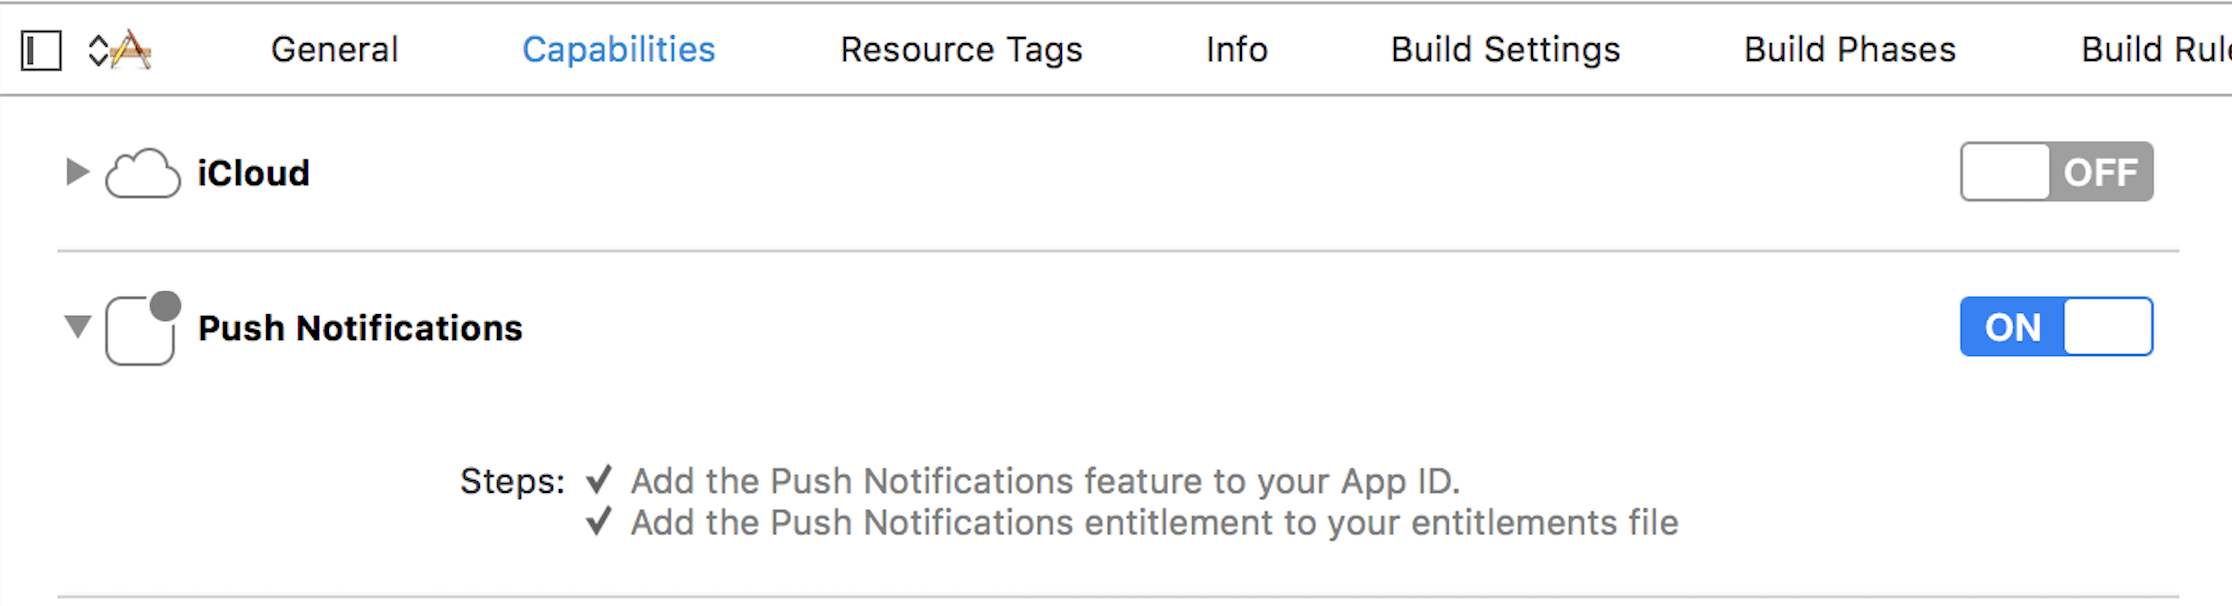 ios-push-notifications-social-network-enable-push-notifications